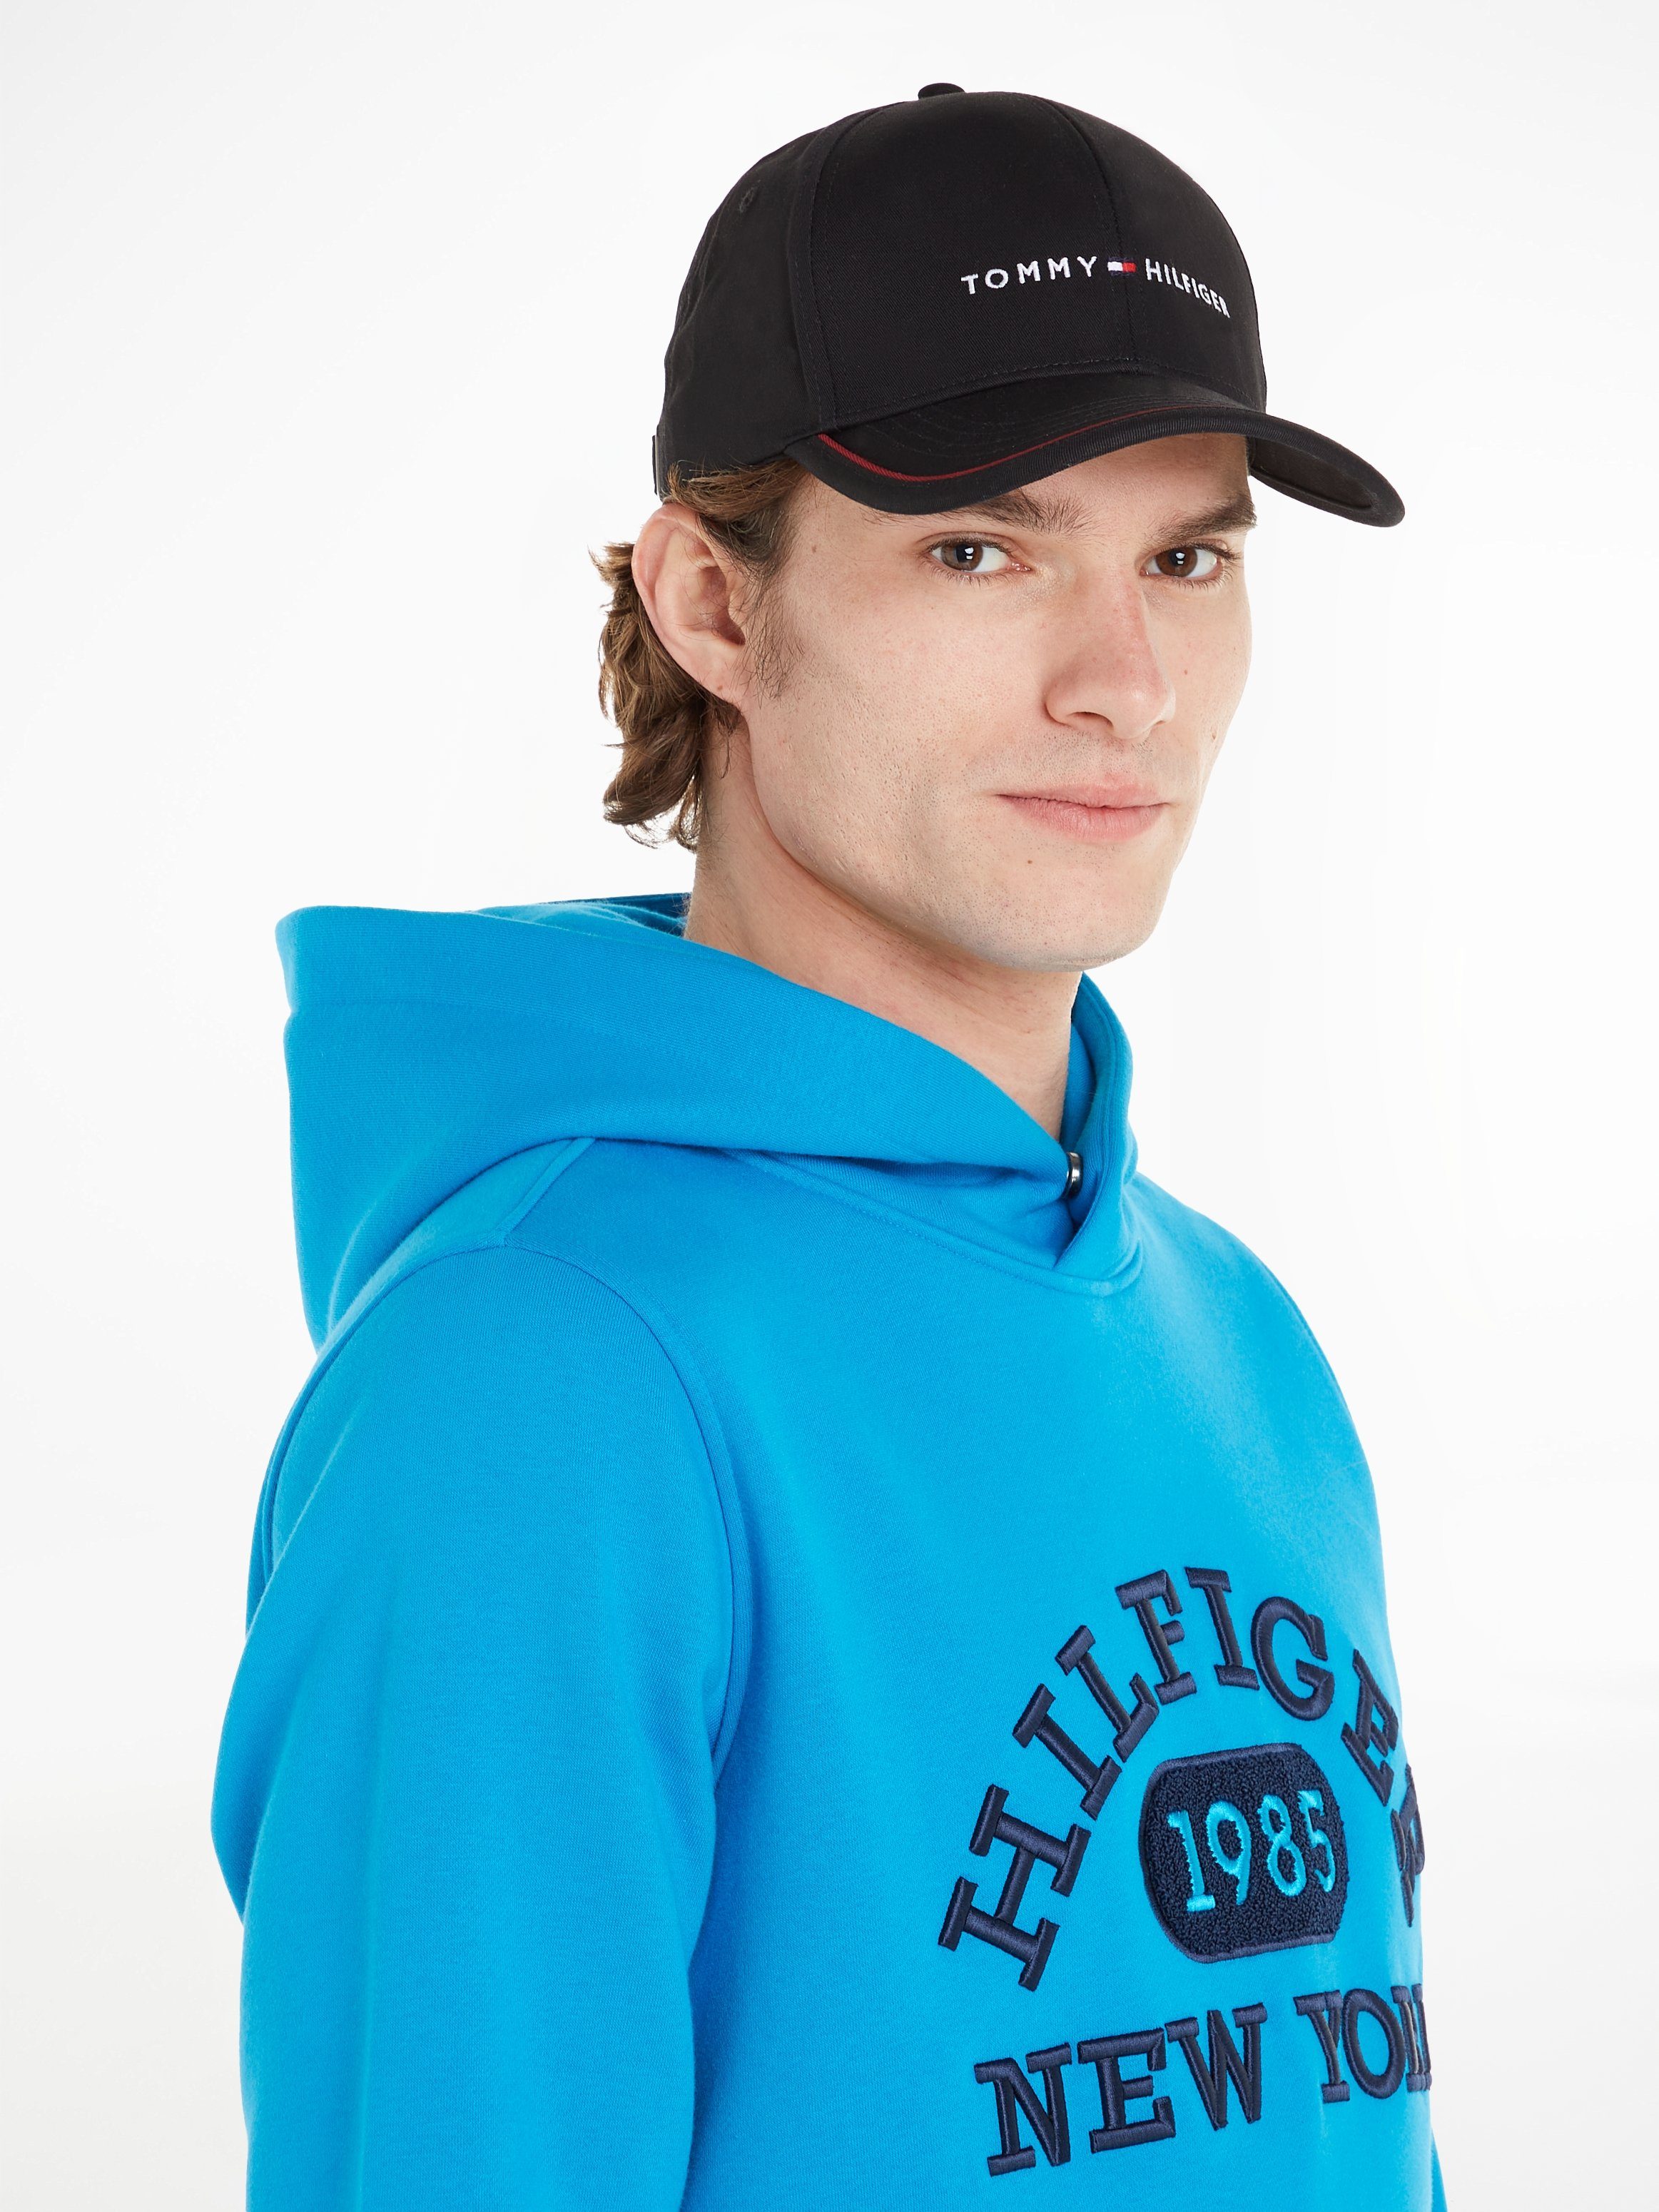 Tommy Hilfiger Baseball Cap TH CAP Black mit SKYLINE Logo-Branding